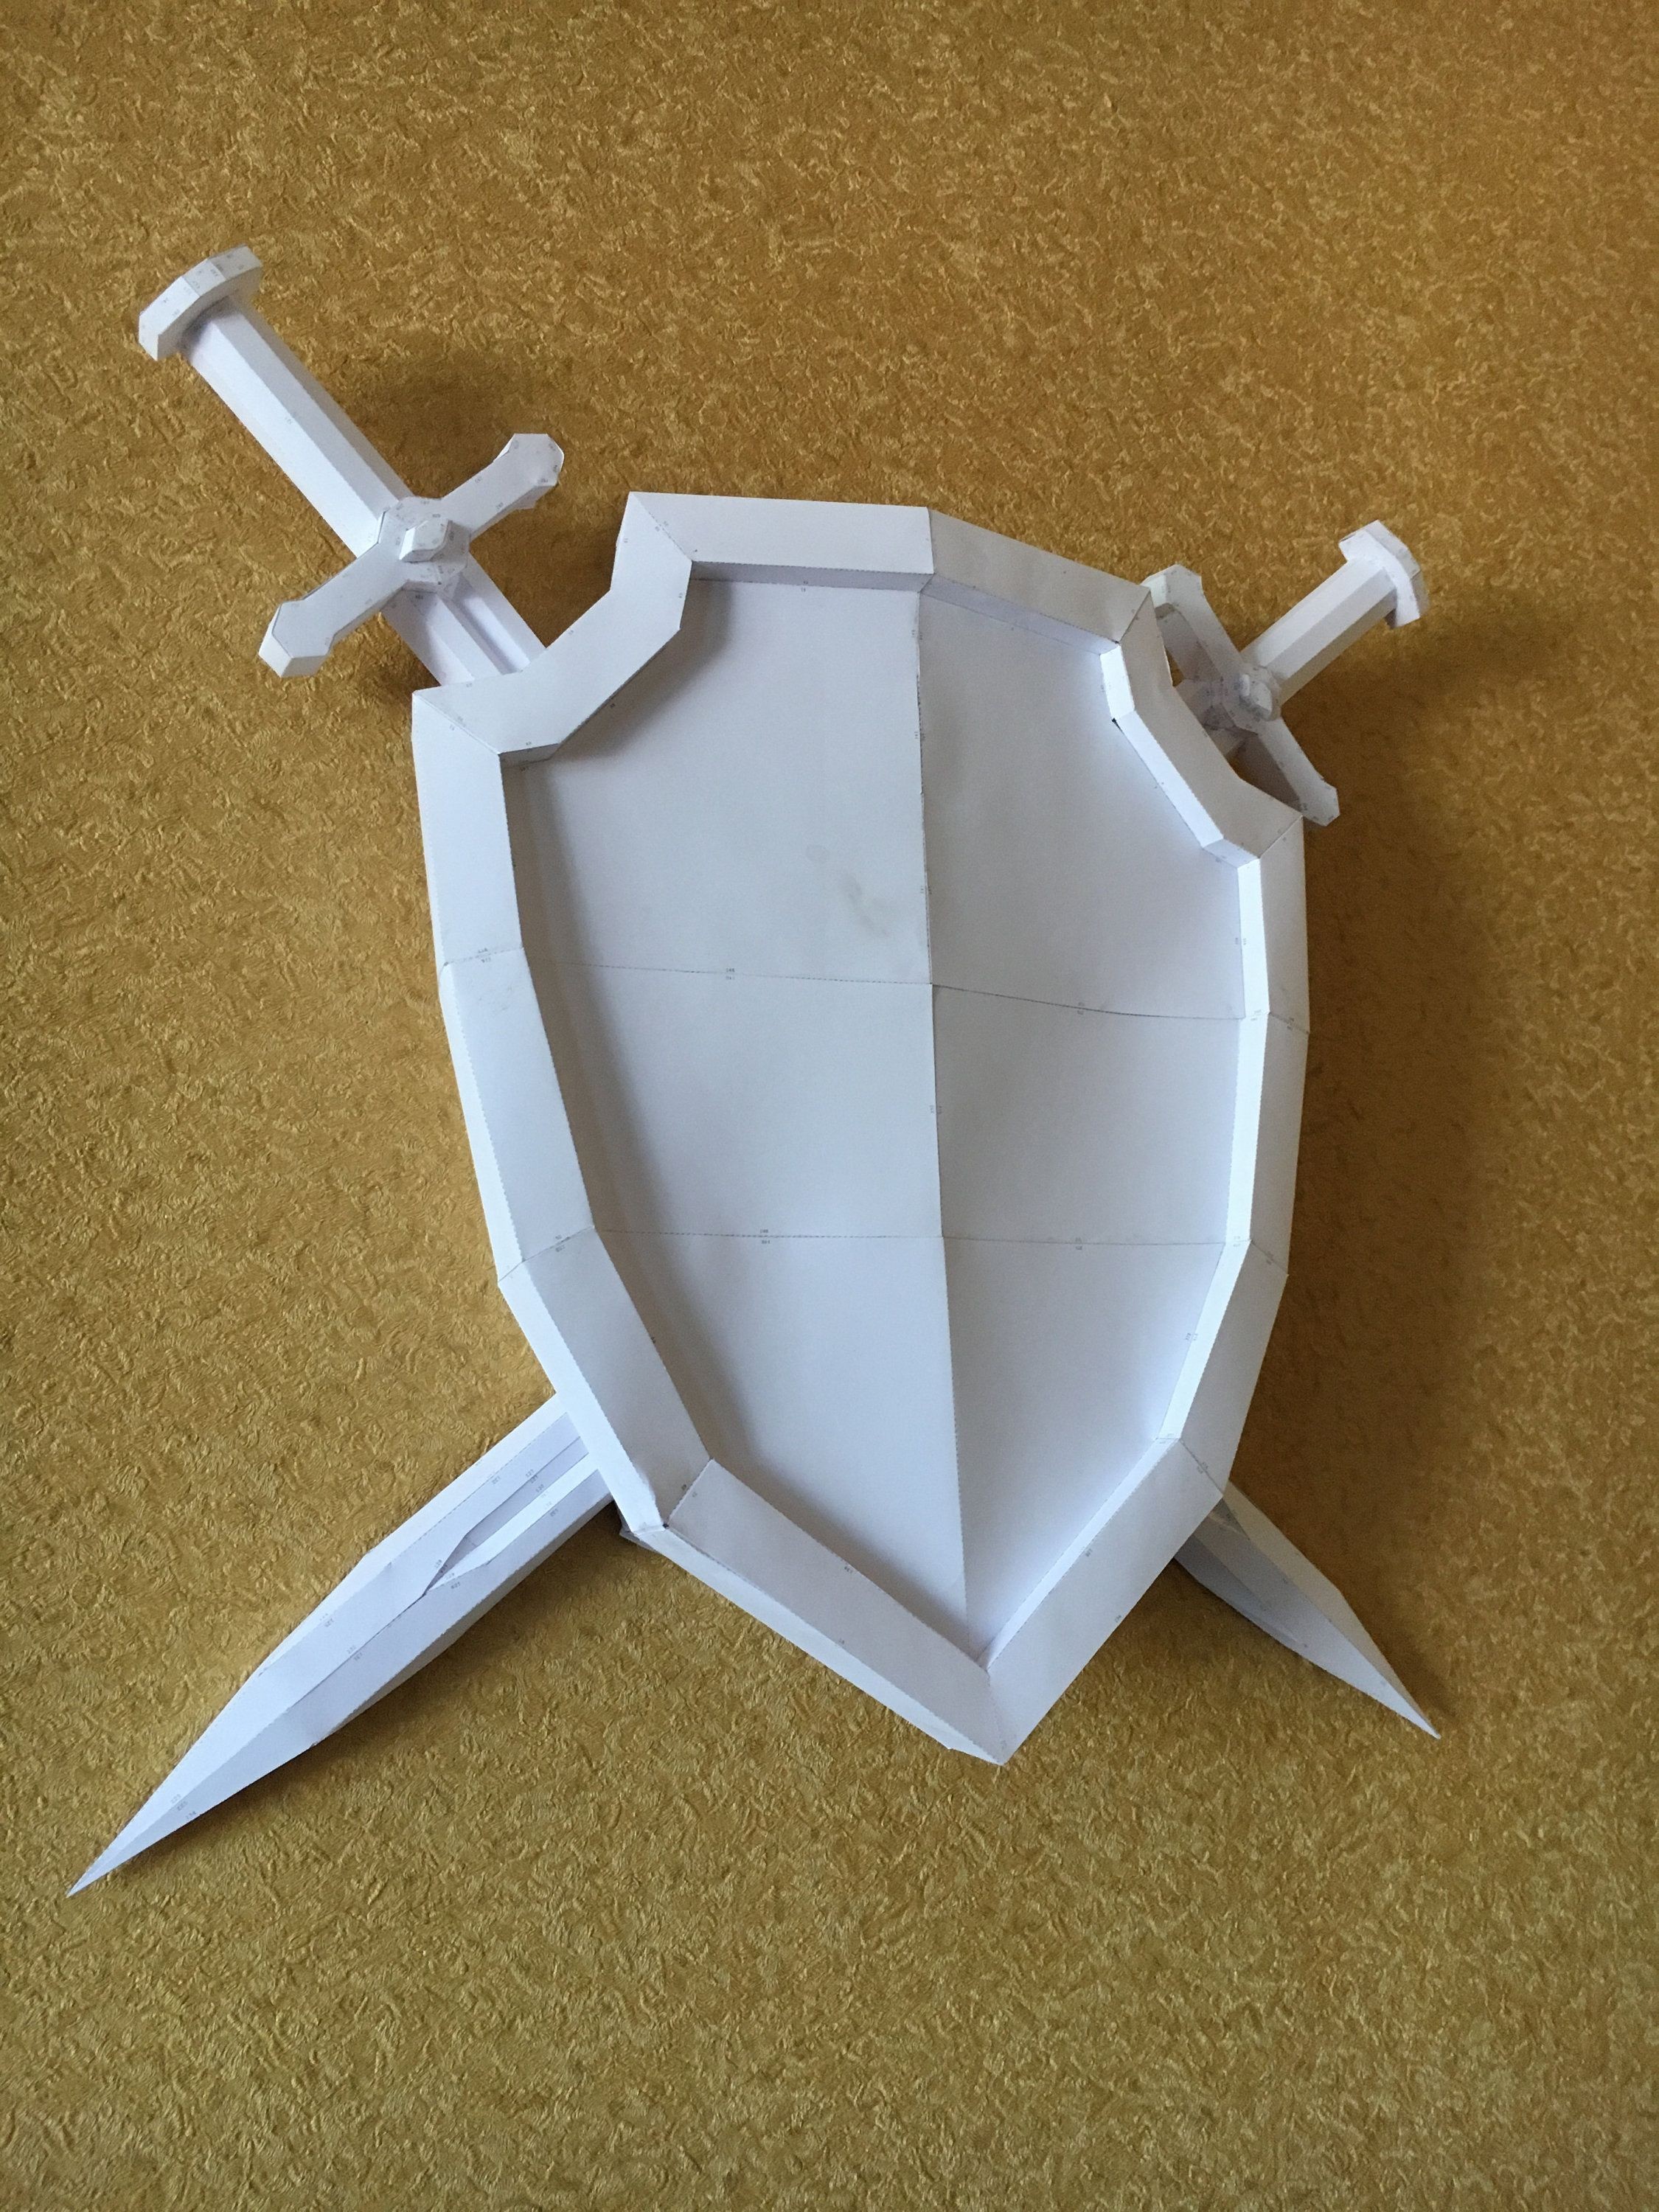 Diy Papercraft Sword Shield Diy Papercraft Model ÐÑÐ¼Ð°Ð¶Ð½ÑÐµ Ð¸Ð·Ð´ÐµÐ Ð¸Ñ